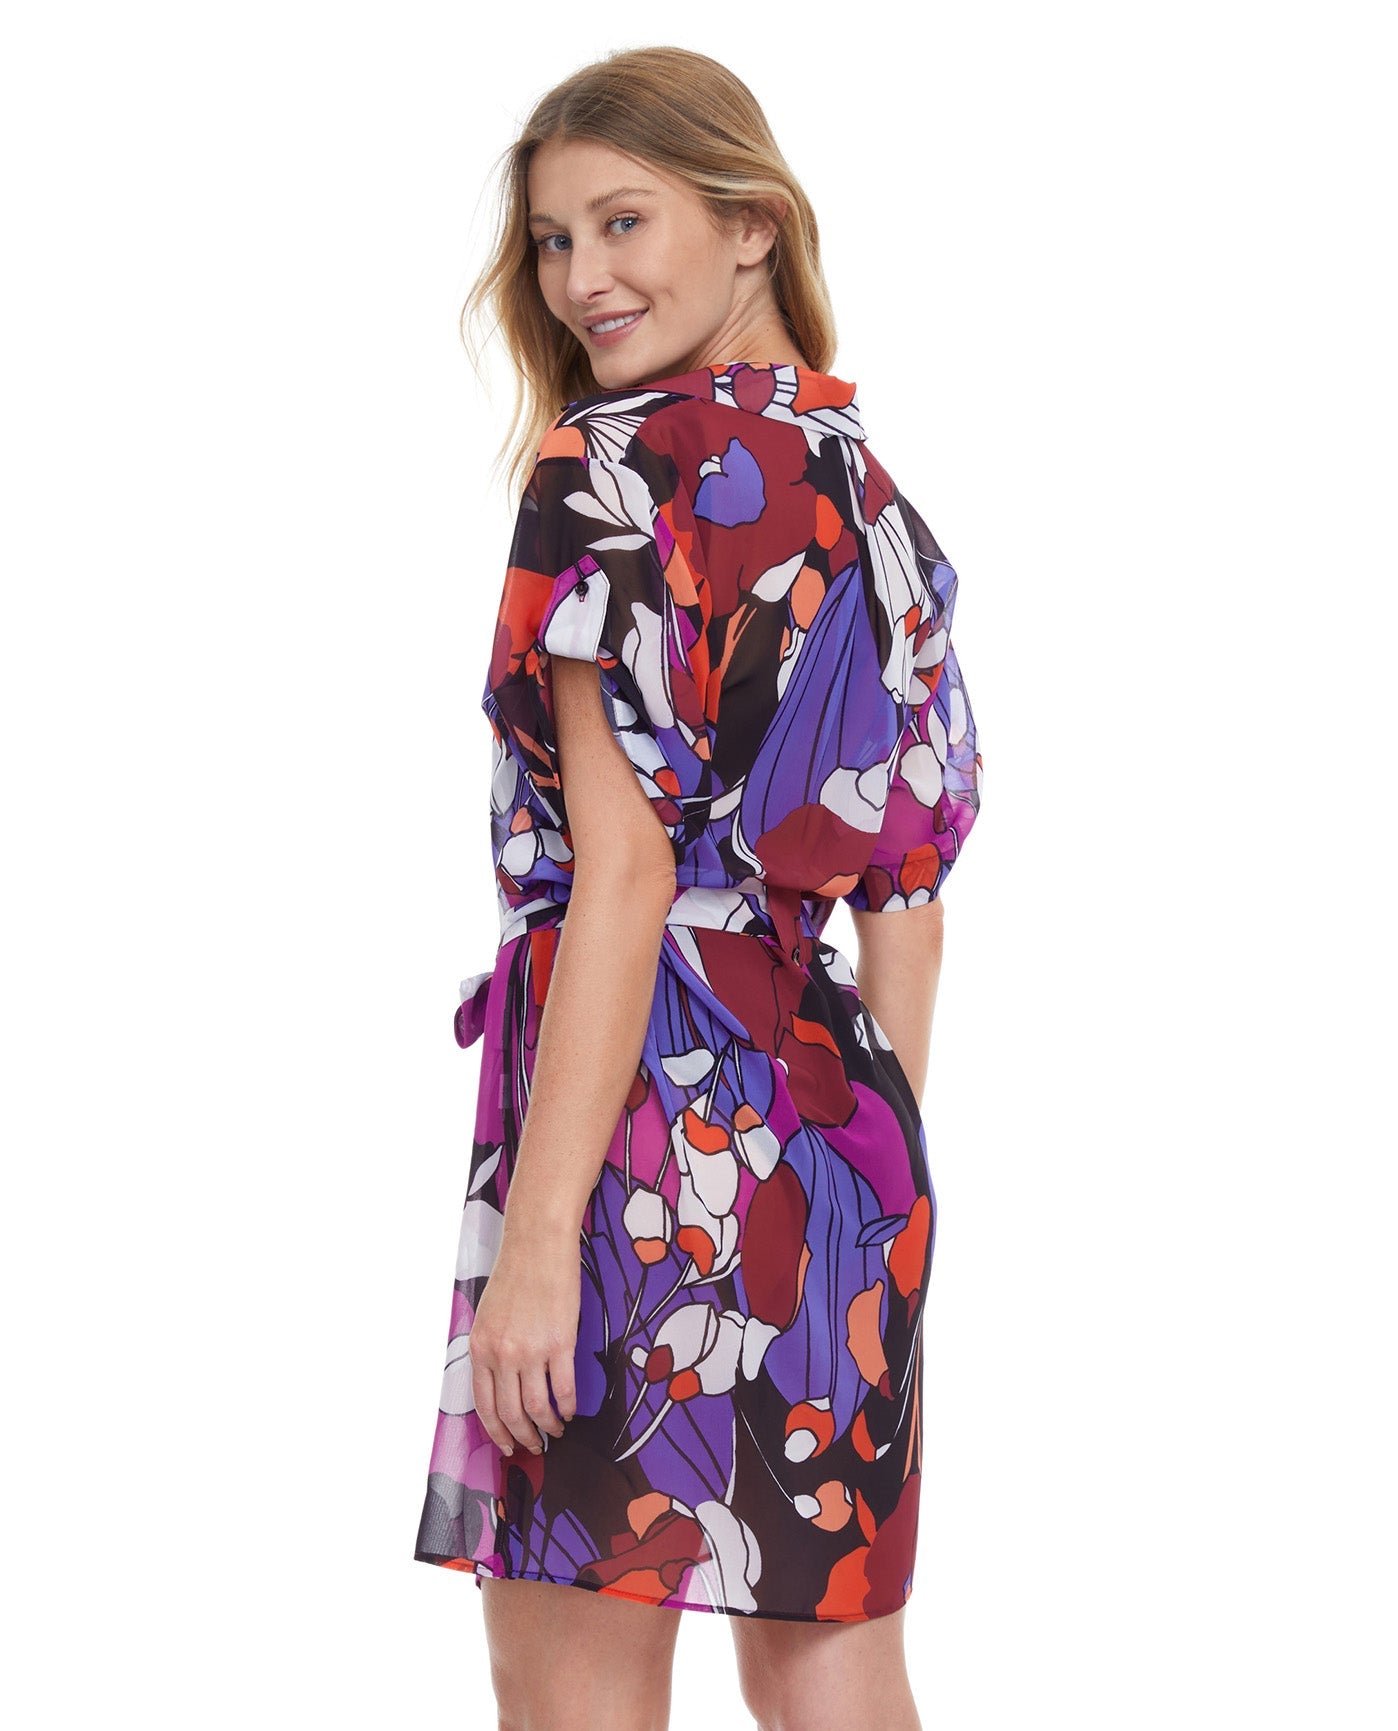 Back View Of Gottex Resortwear Floral Art Belted Cover Up Blouse Dress | Gottex Floral Art Plum